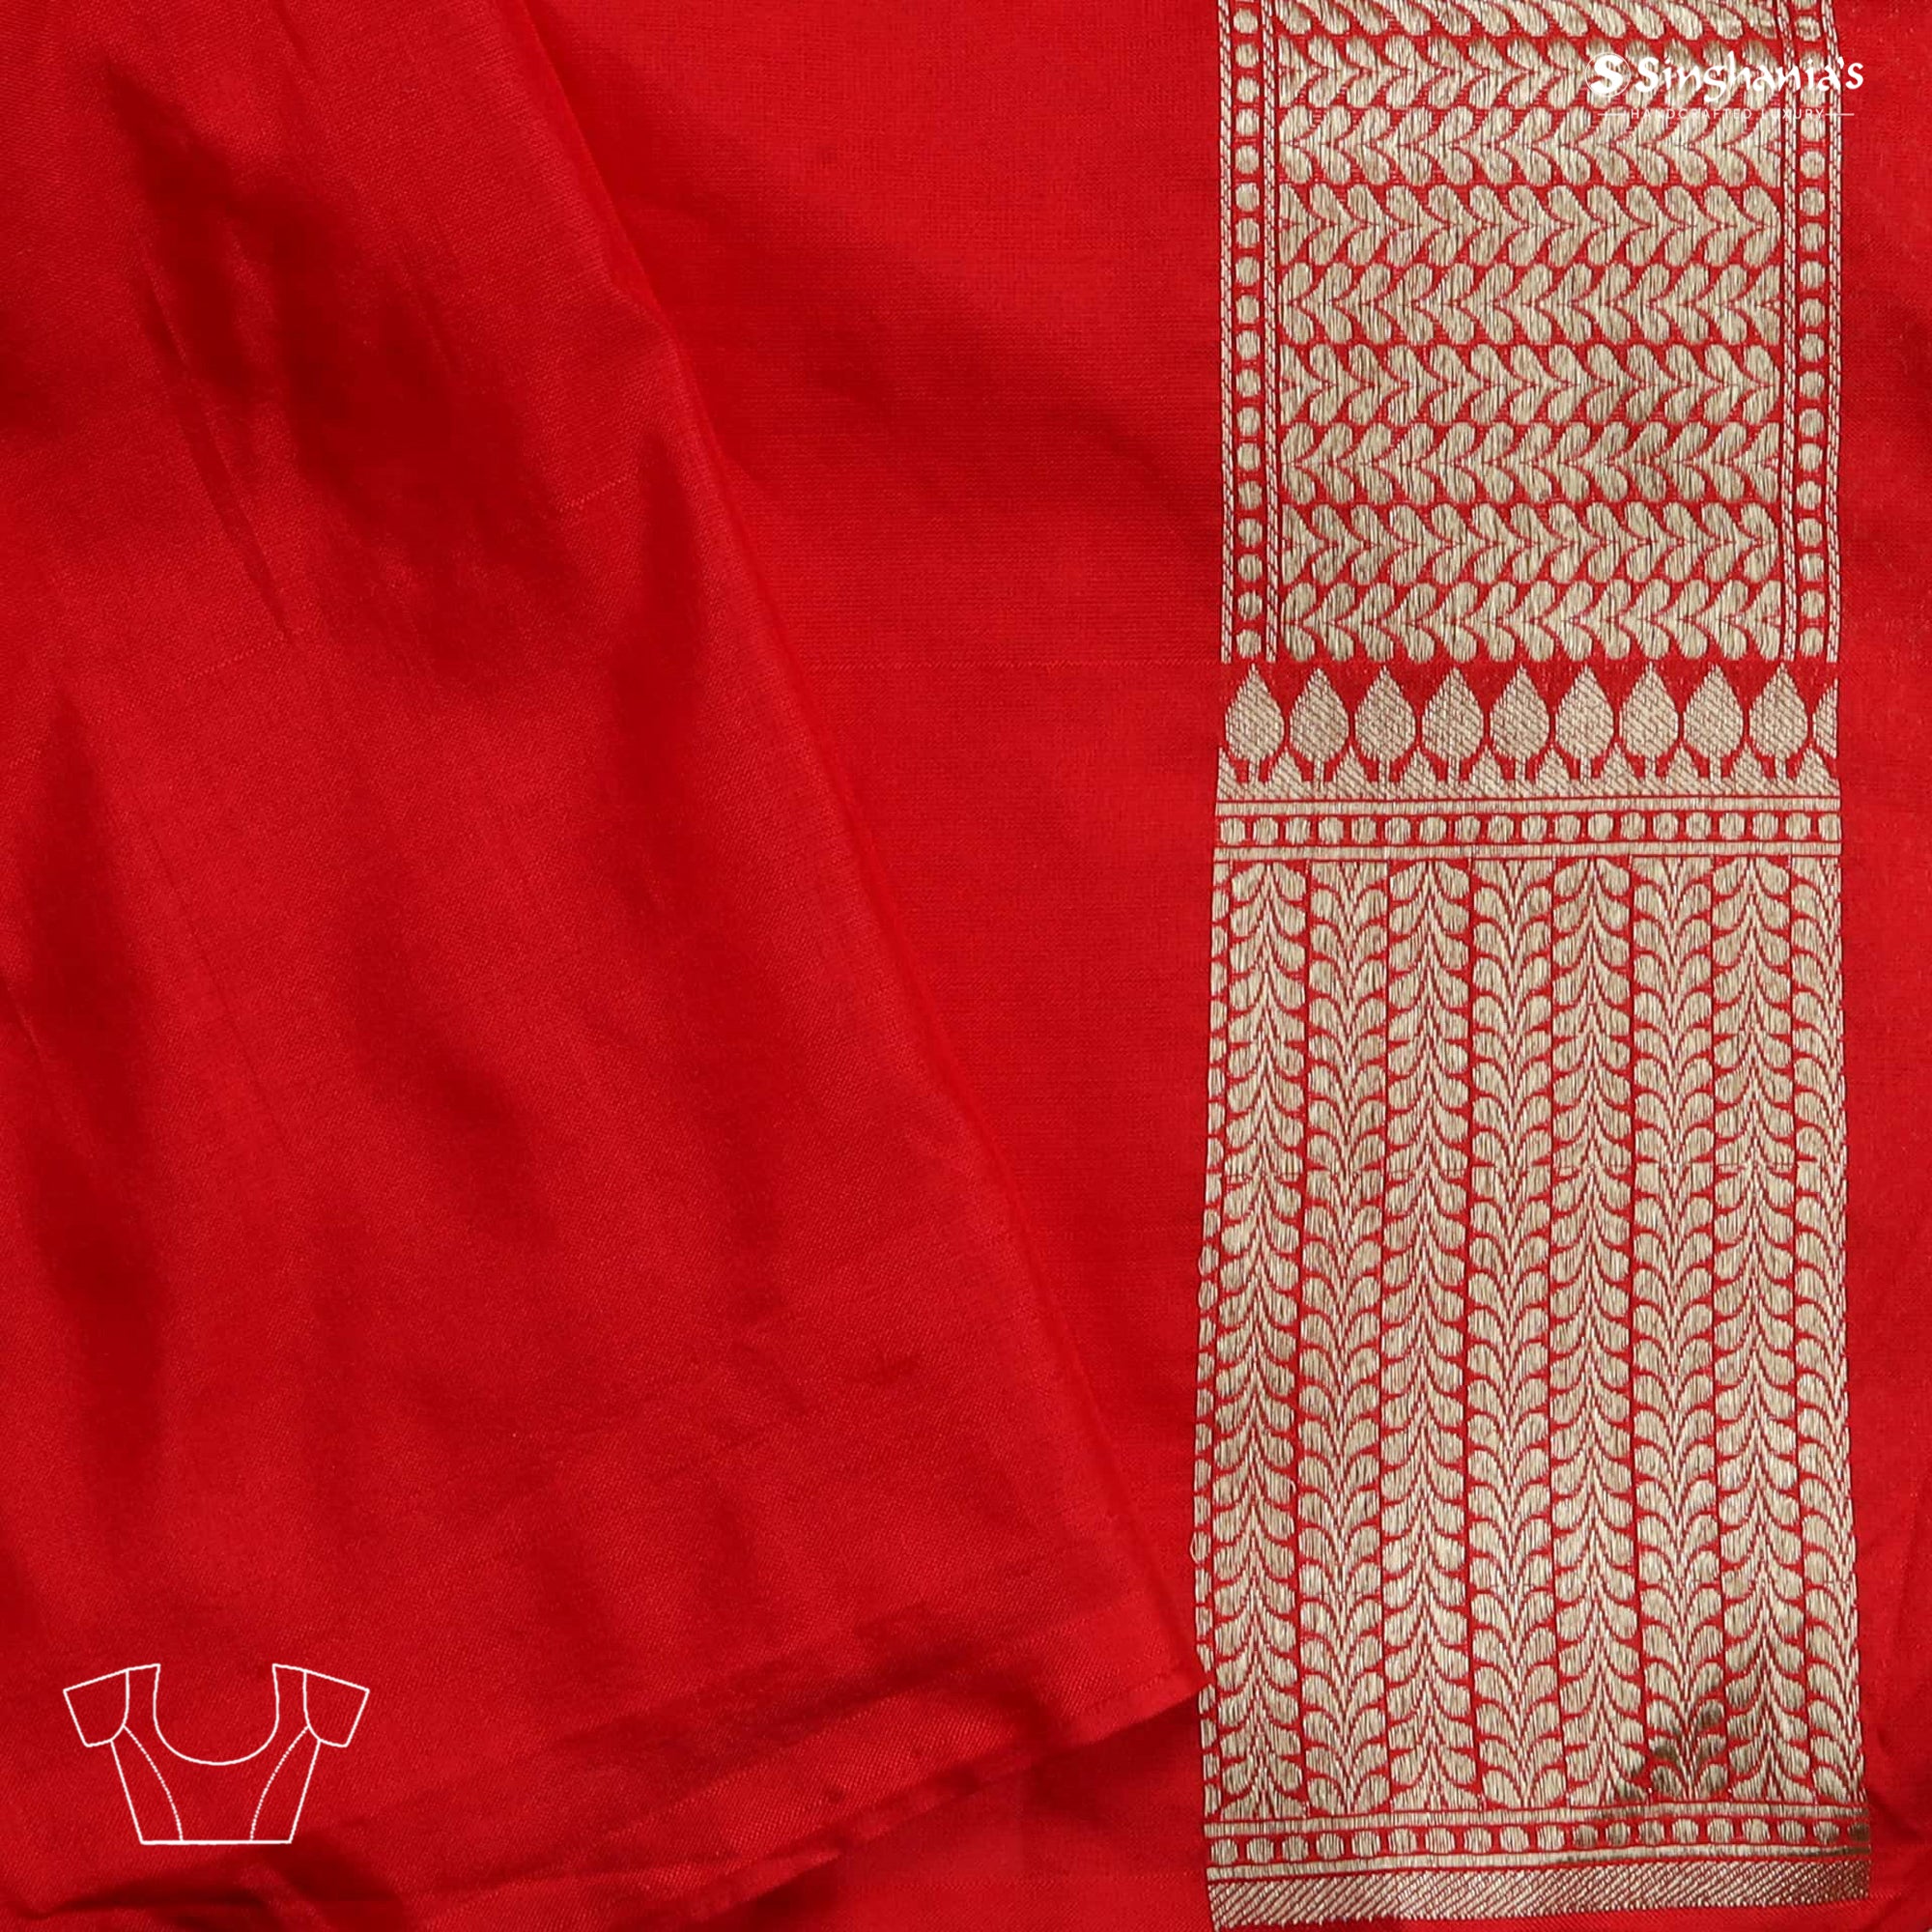 Bright Red Banarasi Silk Handloom Saree With Jaal Design - Singhania's